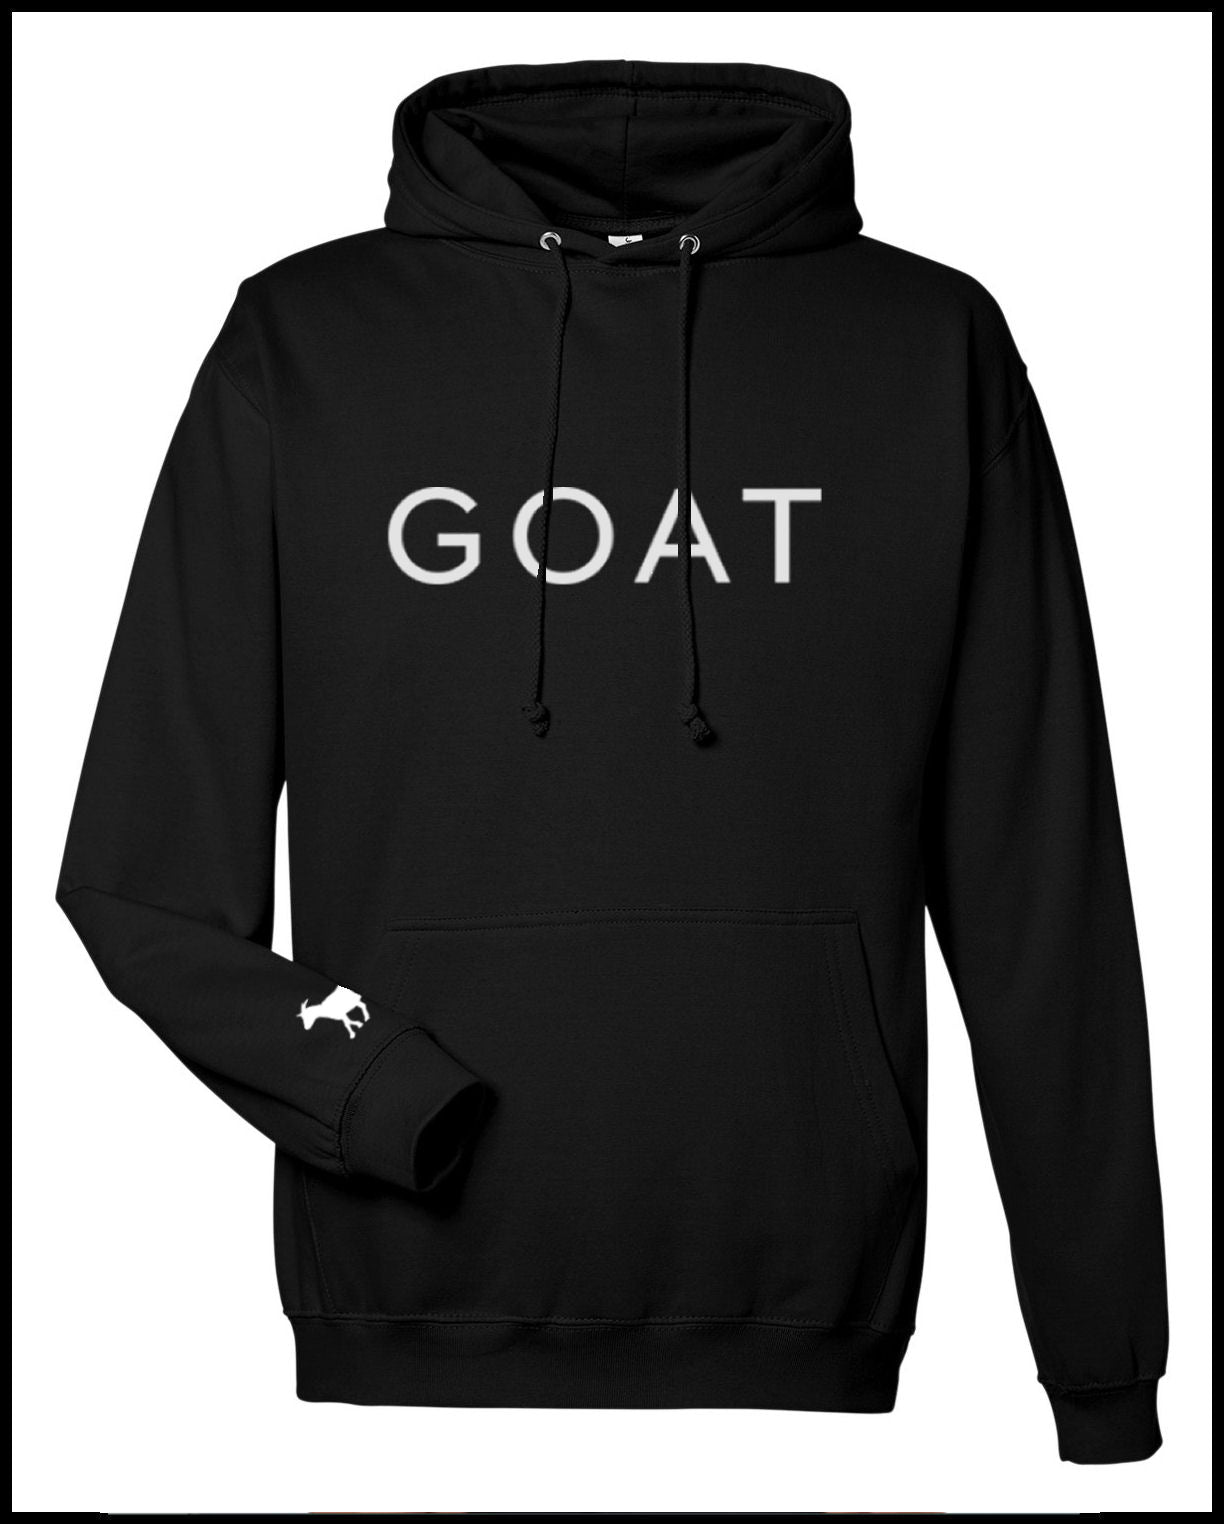 Goat Black Hooded Sweatshirt